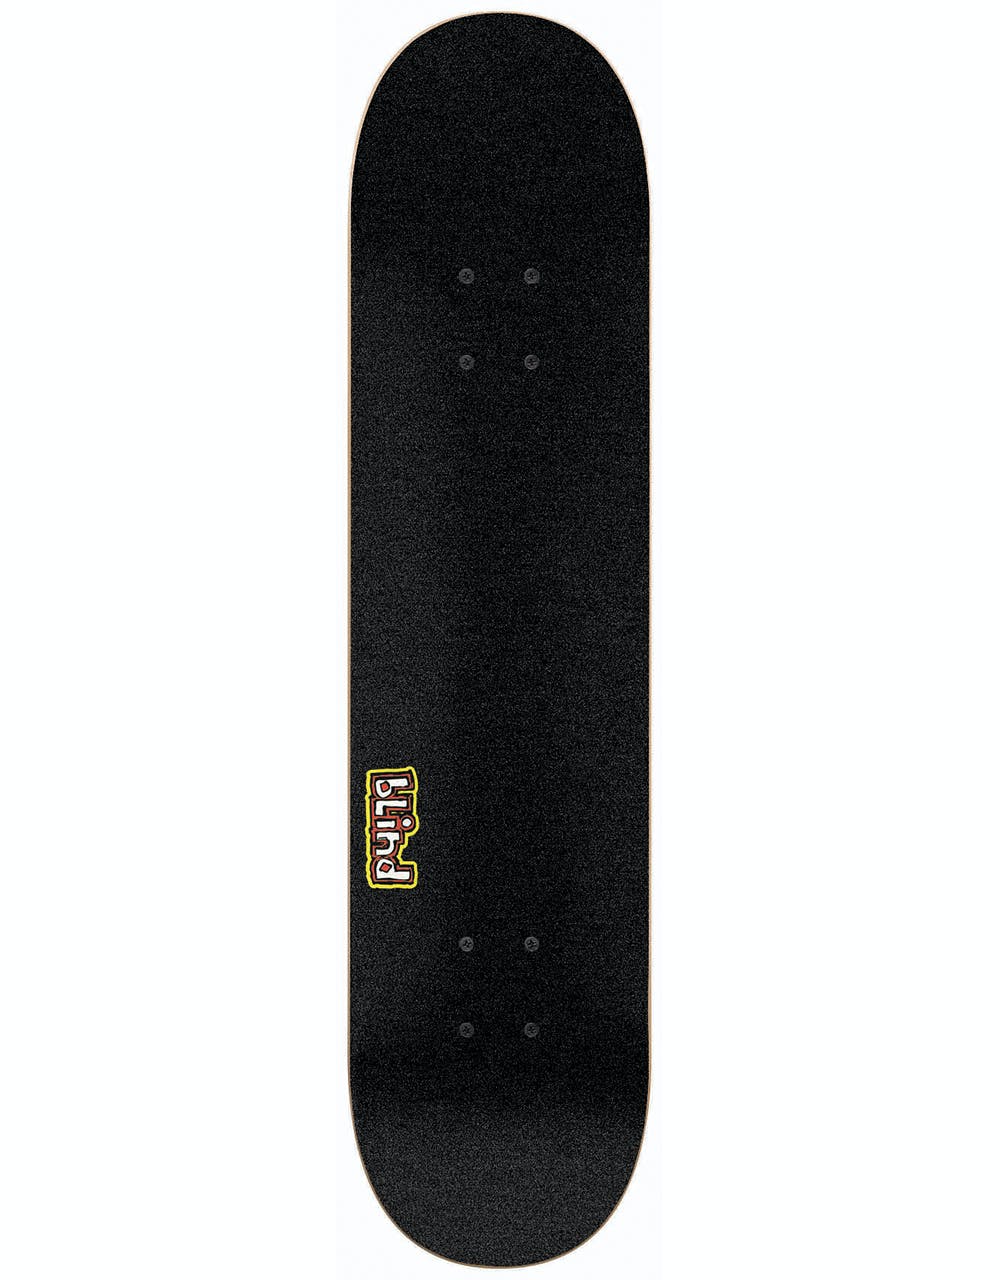 Blind Psychedelic Reaper Premium Complete Skateboard - 7.625"